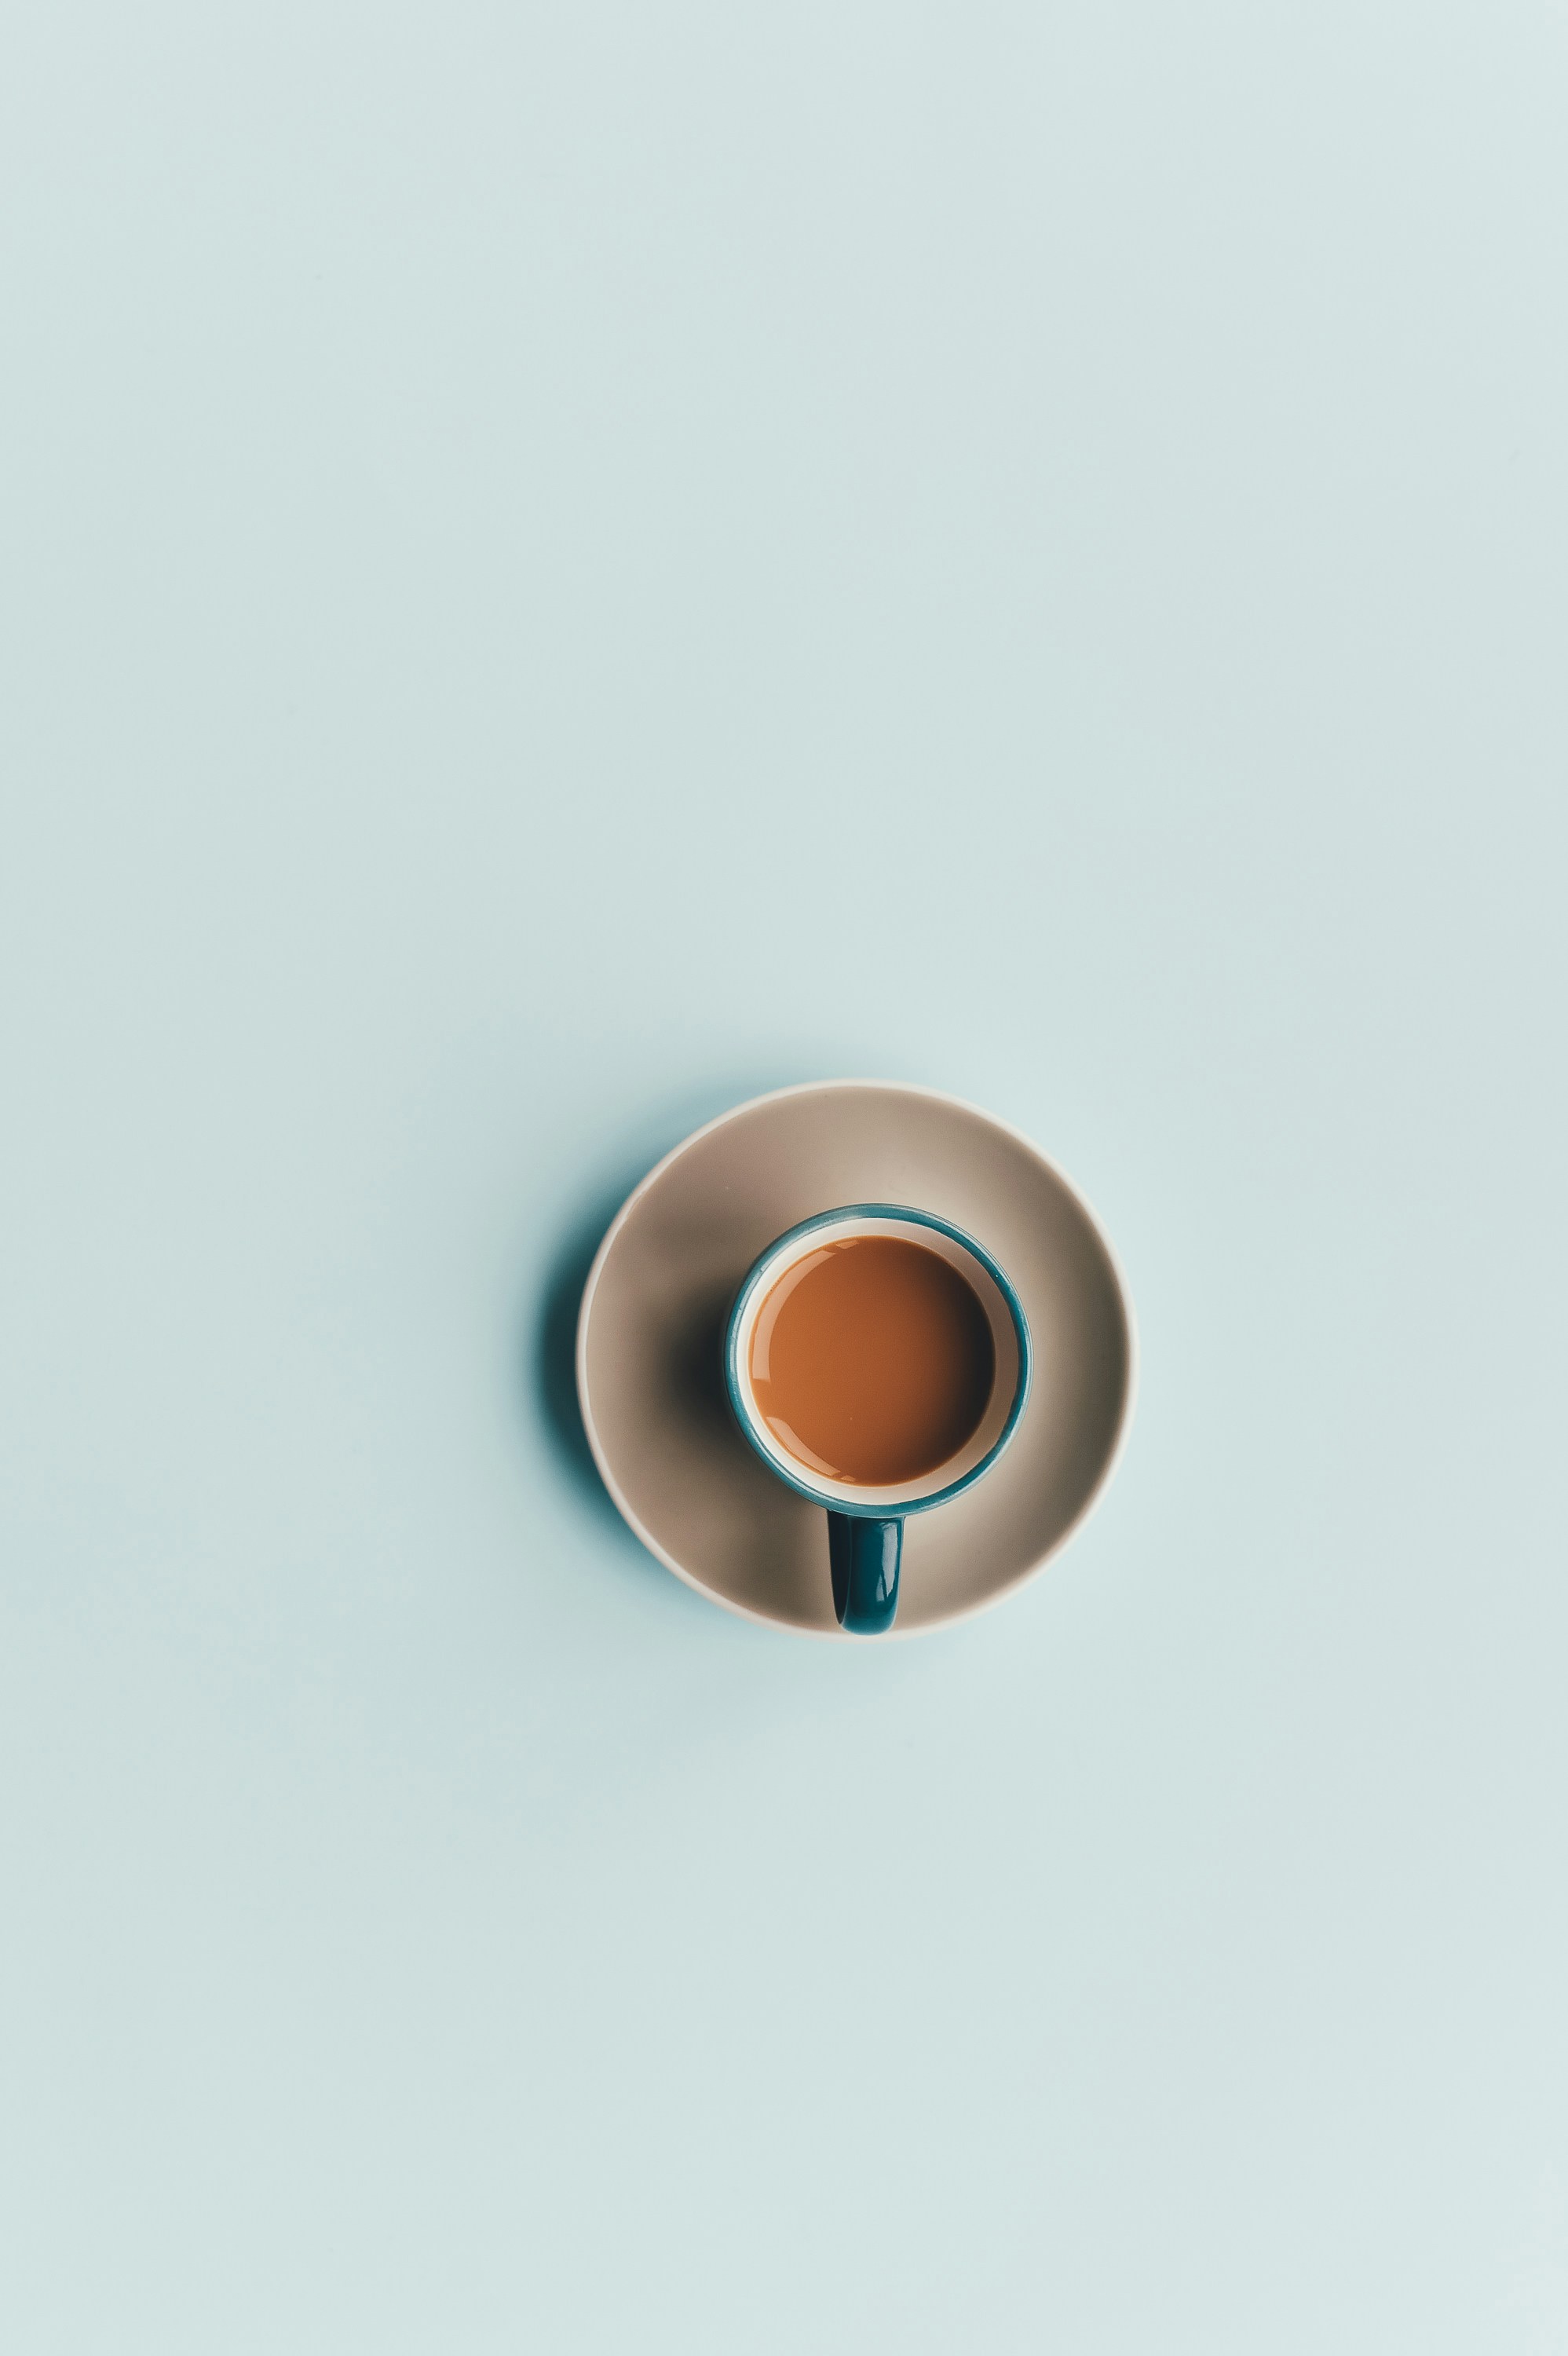 Minimal coffee cup